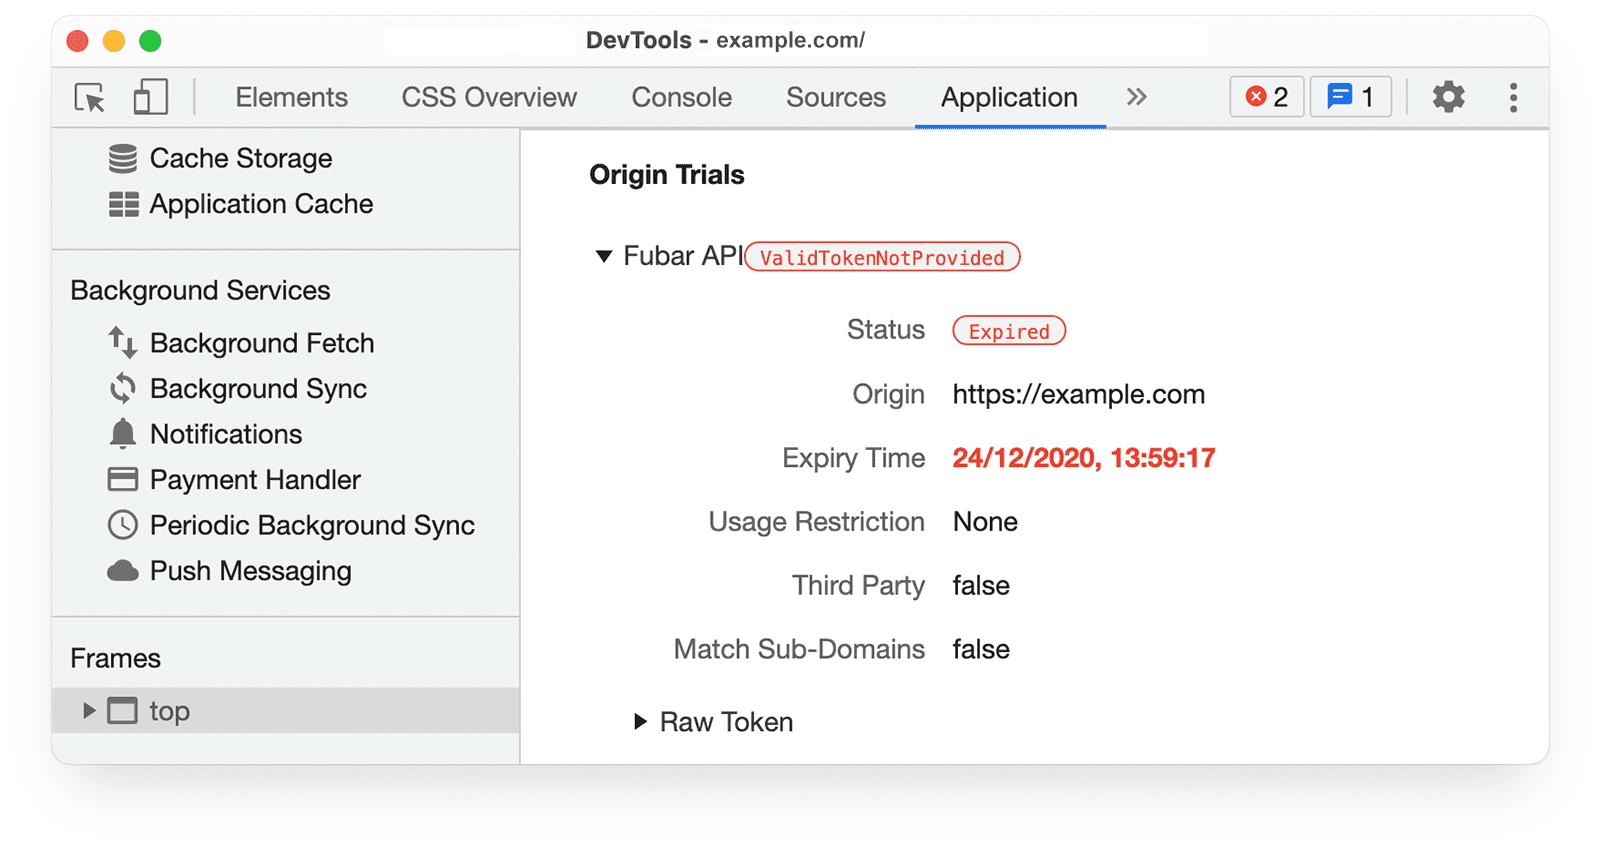 Chrome DevTools 
informações de testes de origem no painel &quot;Application&quot; mostrando &quot;ValidTokenNotProvided&quot; e &quot;Status Expirado&quot;